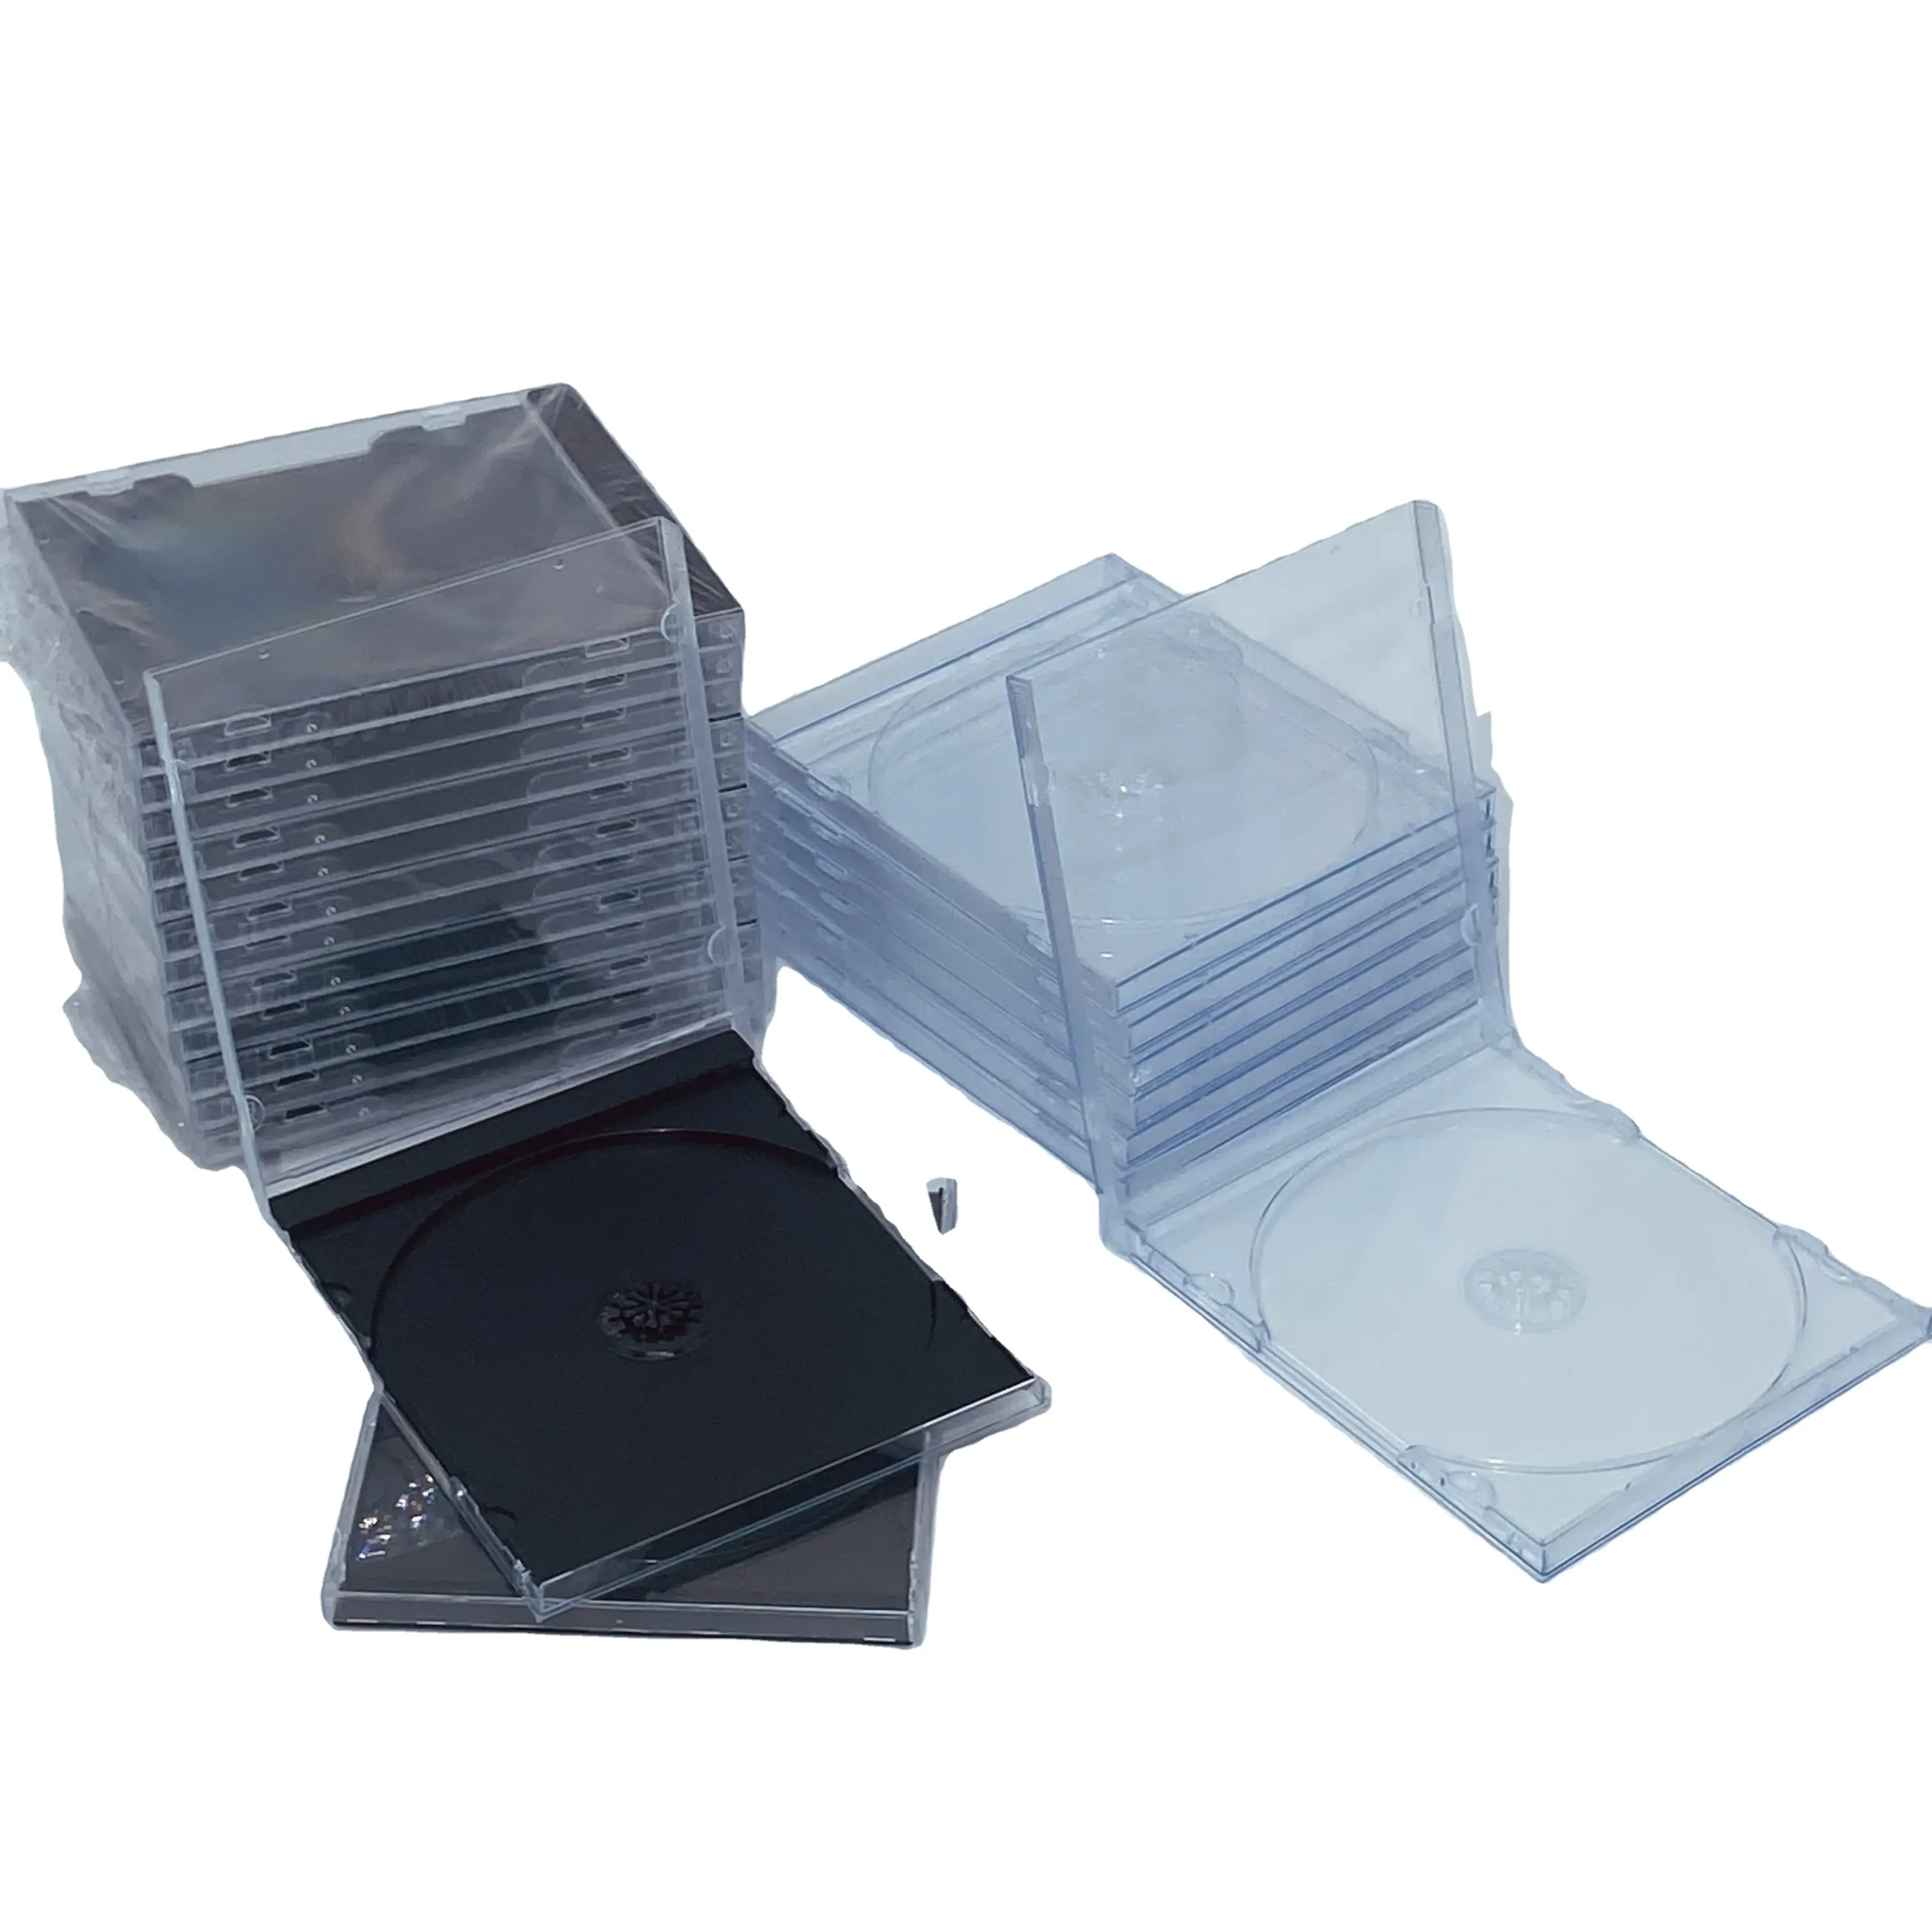 Caixa de cd para casamento, caixa preta para inserir cd para casamento, caixa de plástico duro 2022